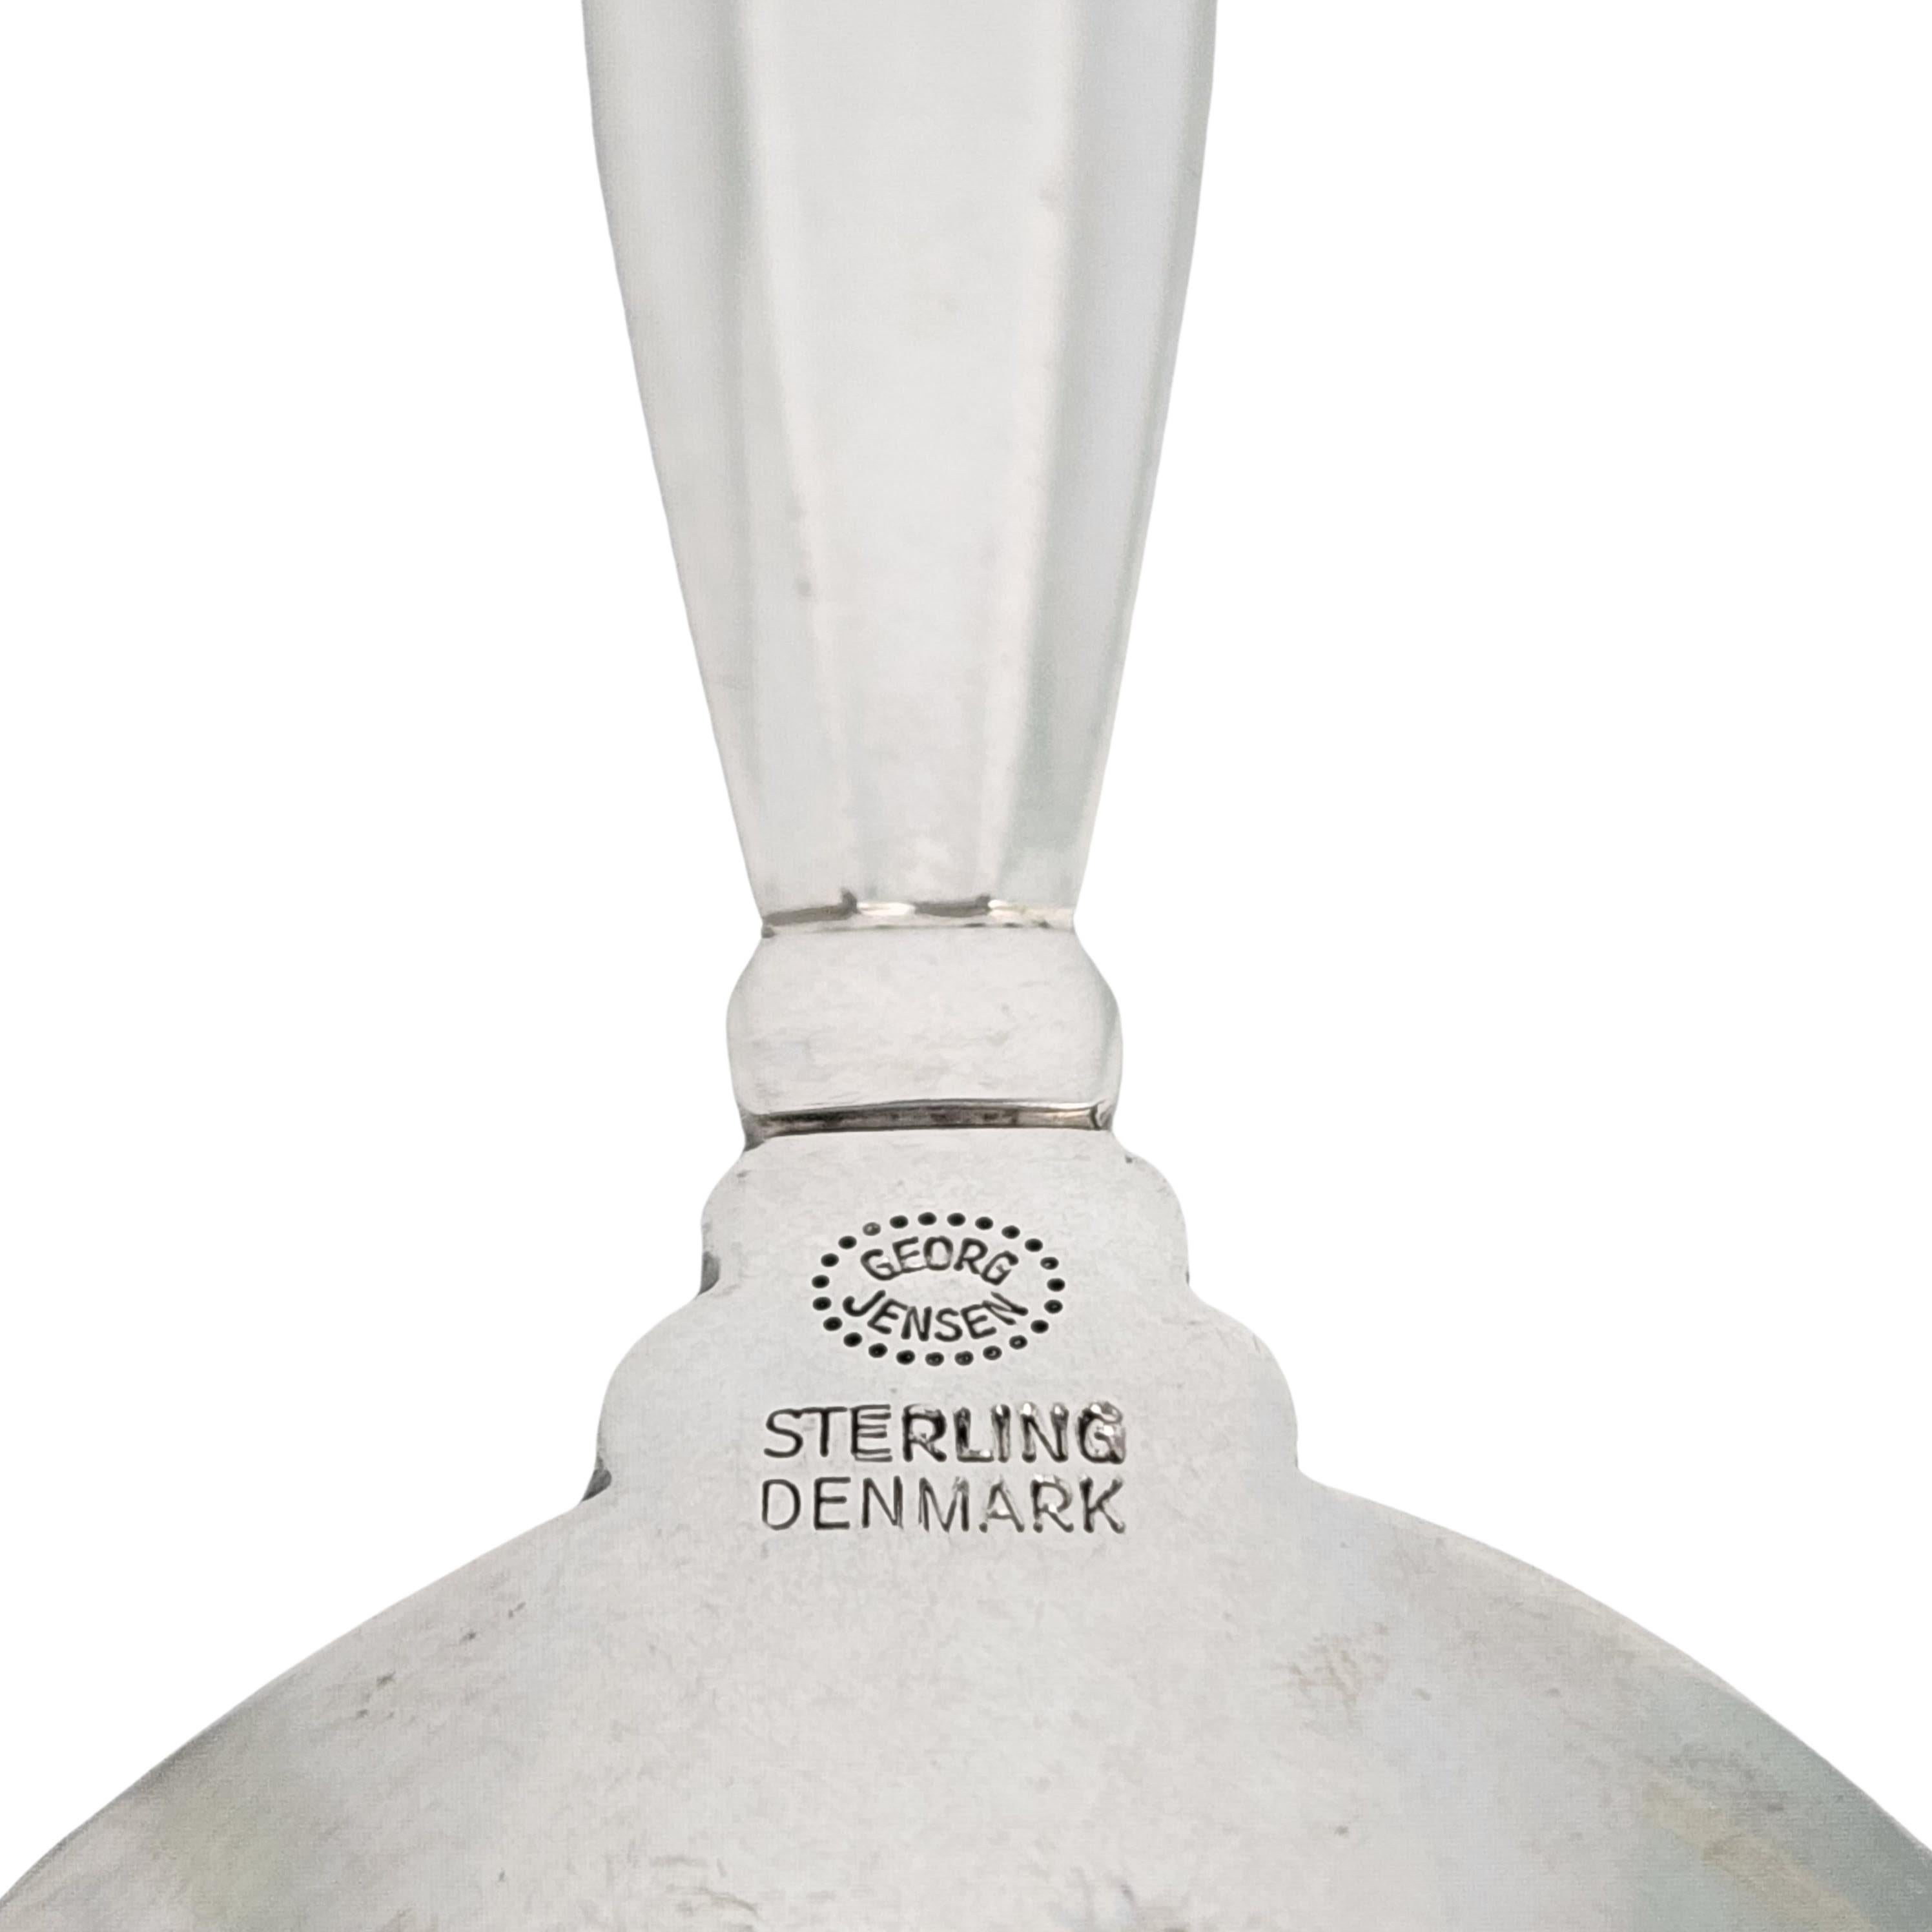 Georg Jensen Denmark Acorn Sterling Silver Tea Caddy/Sugar Spoon #16892 For Sale 4